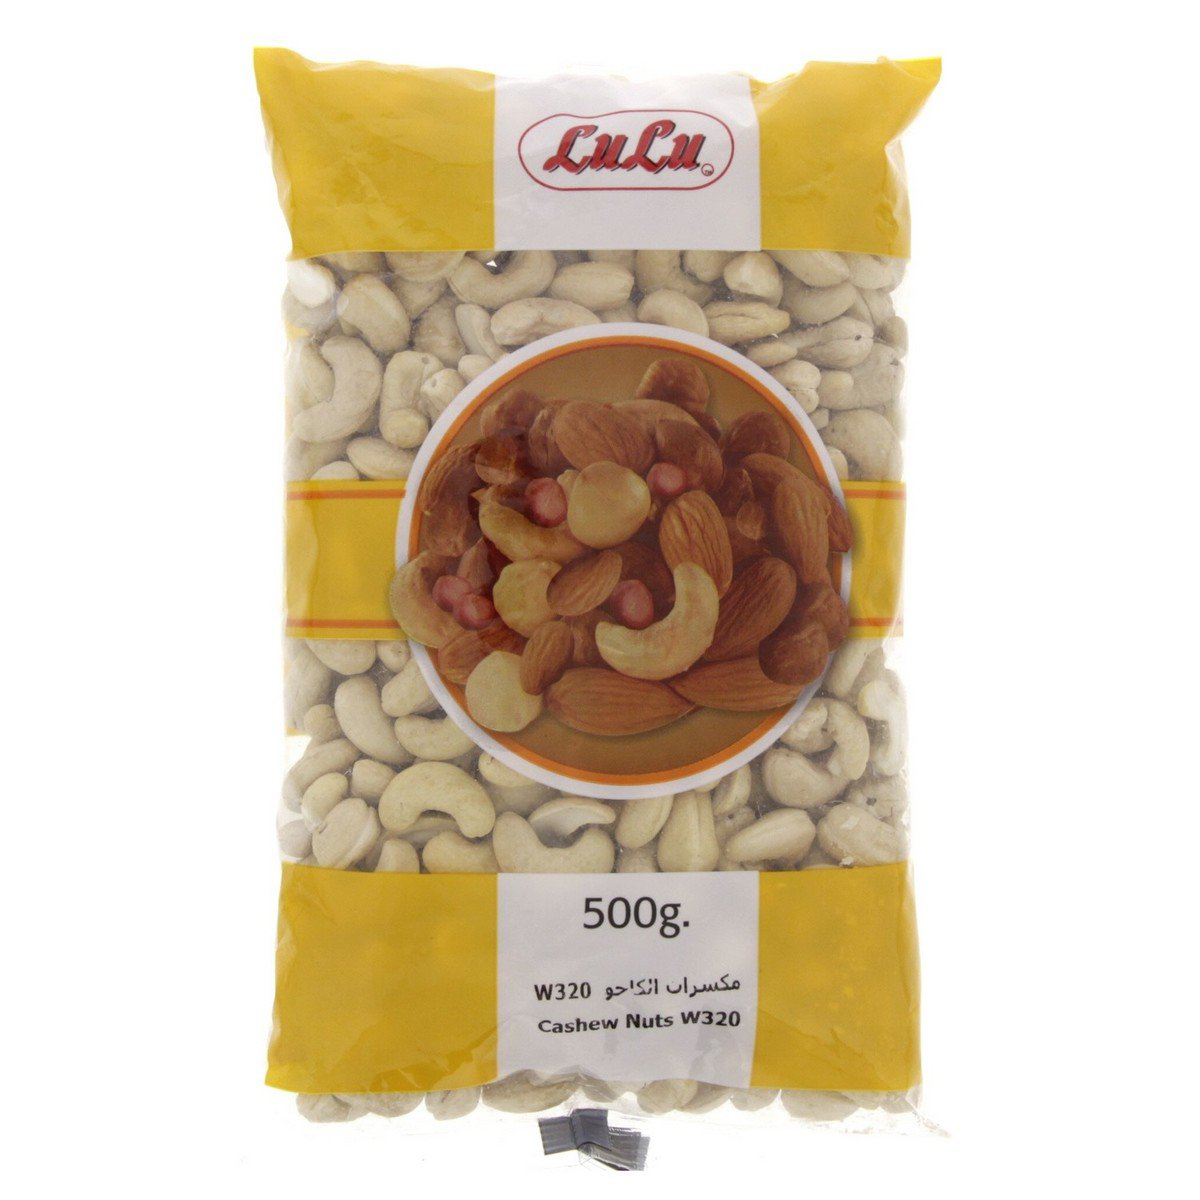 LuLu Cashew Nuts W320 500 g